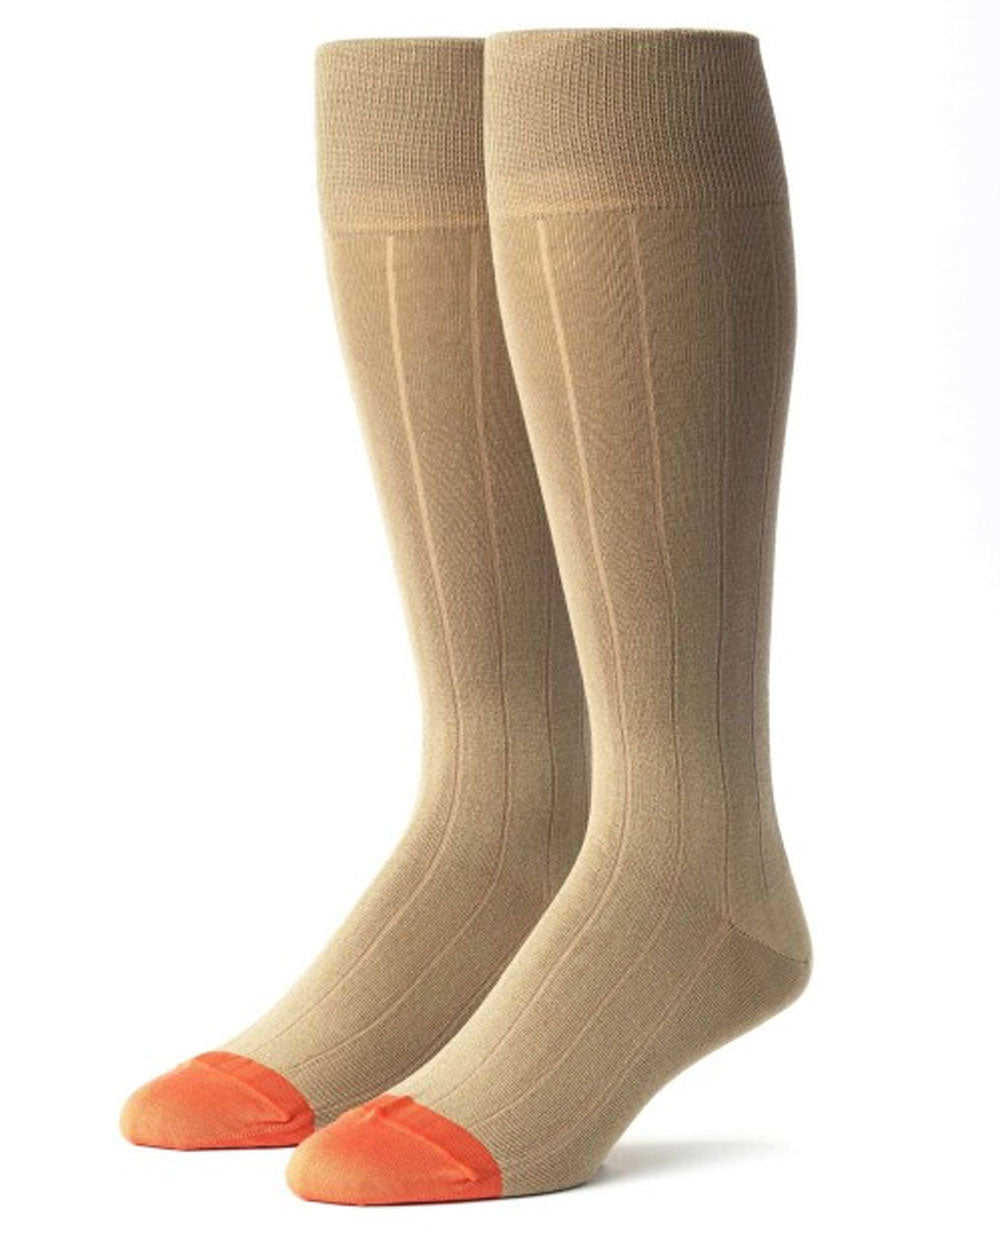 Over the Calf Socks in Khaki and Orange